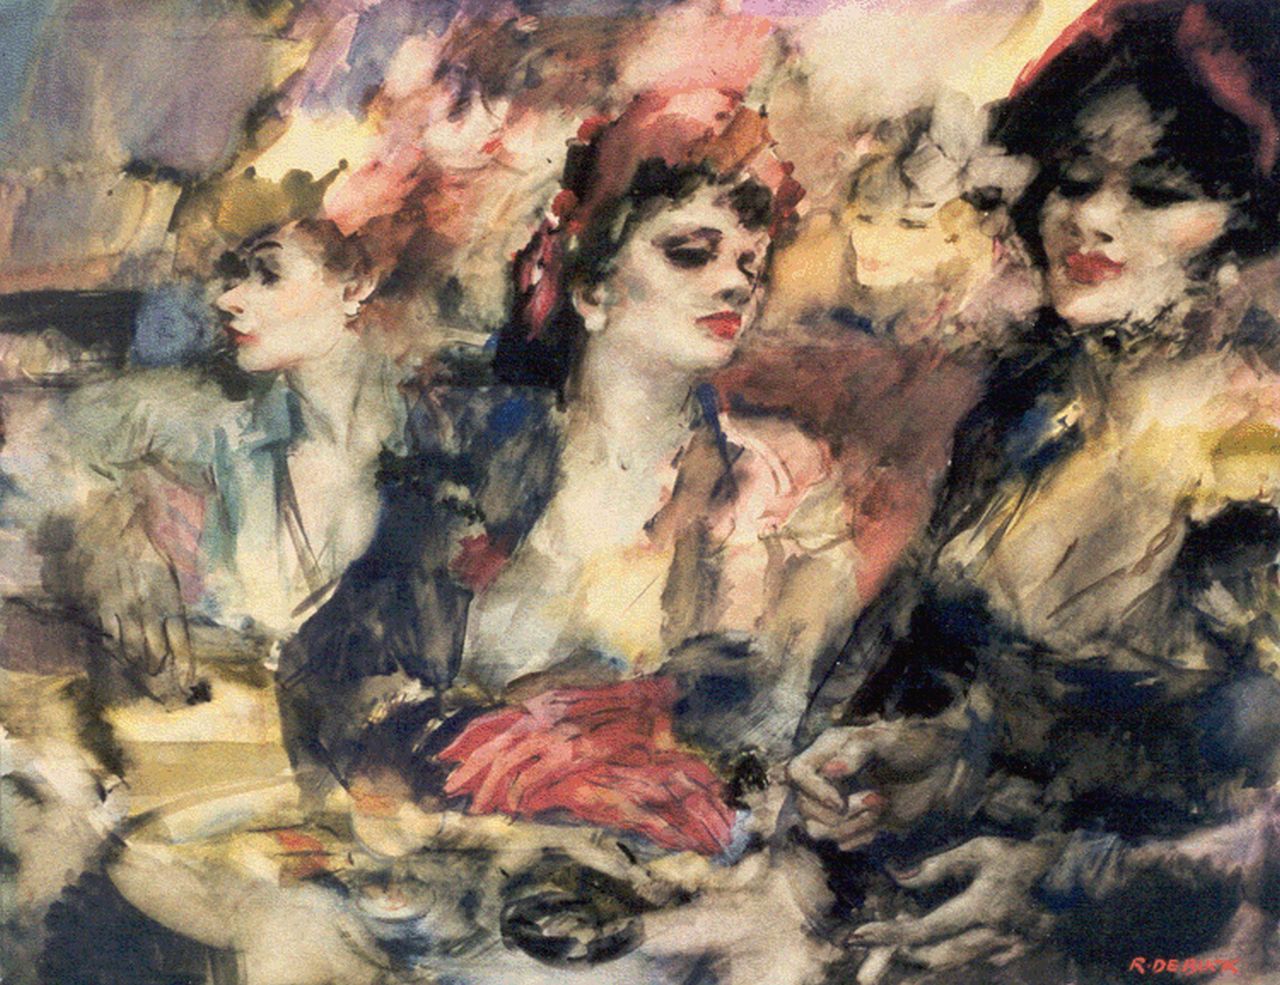 Buck R. de | Raphaël de Buck, Three women, Aquarell auf Papier 52,0 x 67,4 cm, signed l.r.